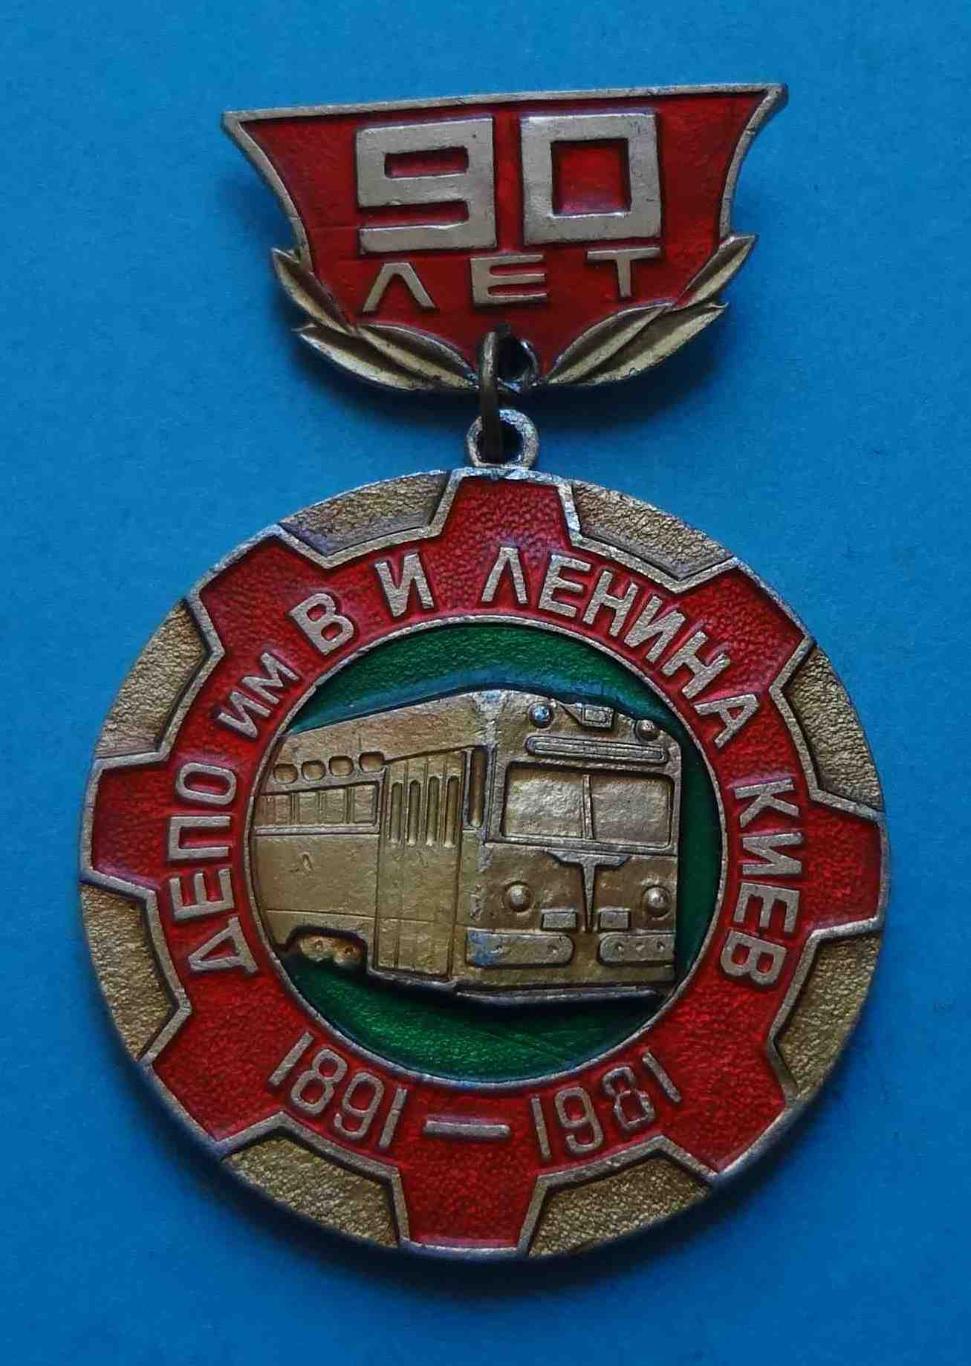 90 лет Троллейбусное депо имени Ленина Киев 1891-1981